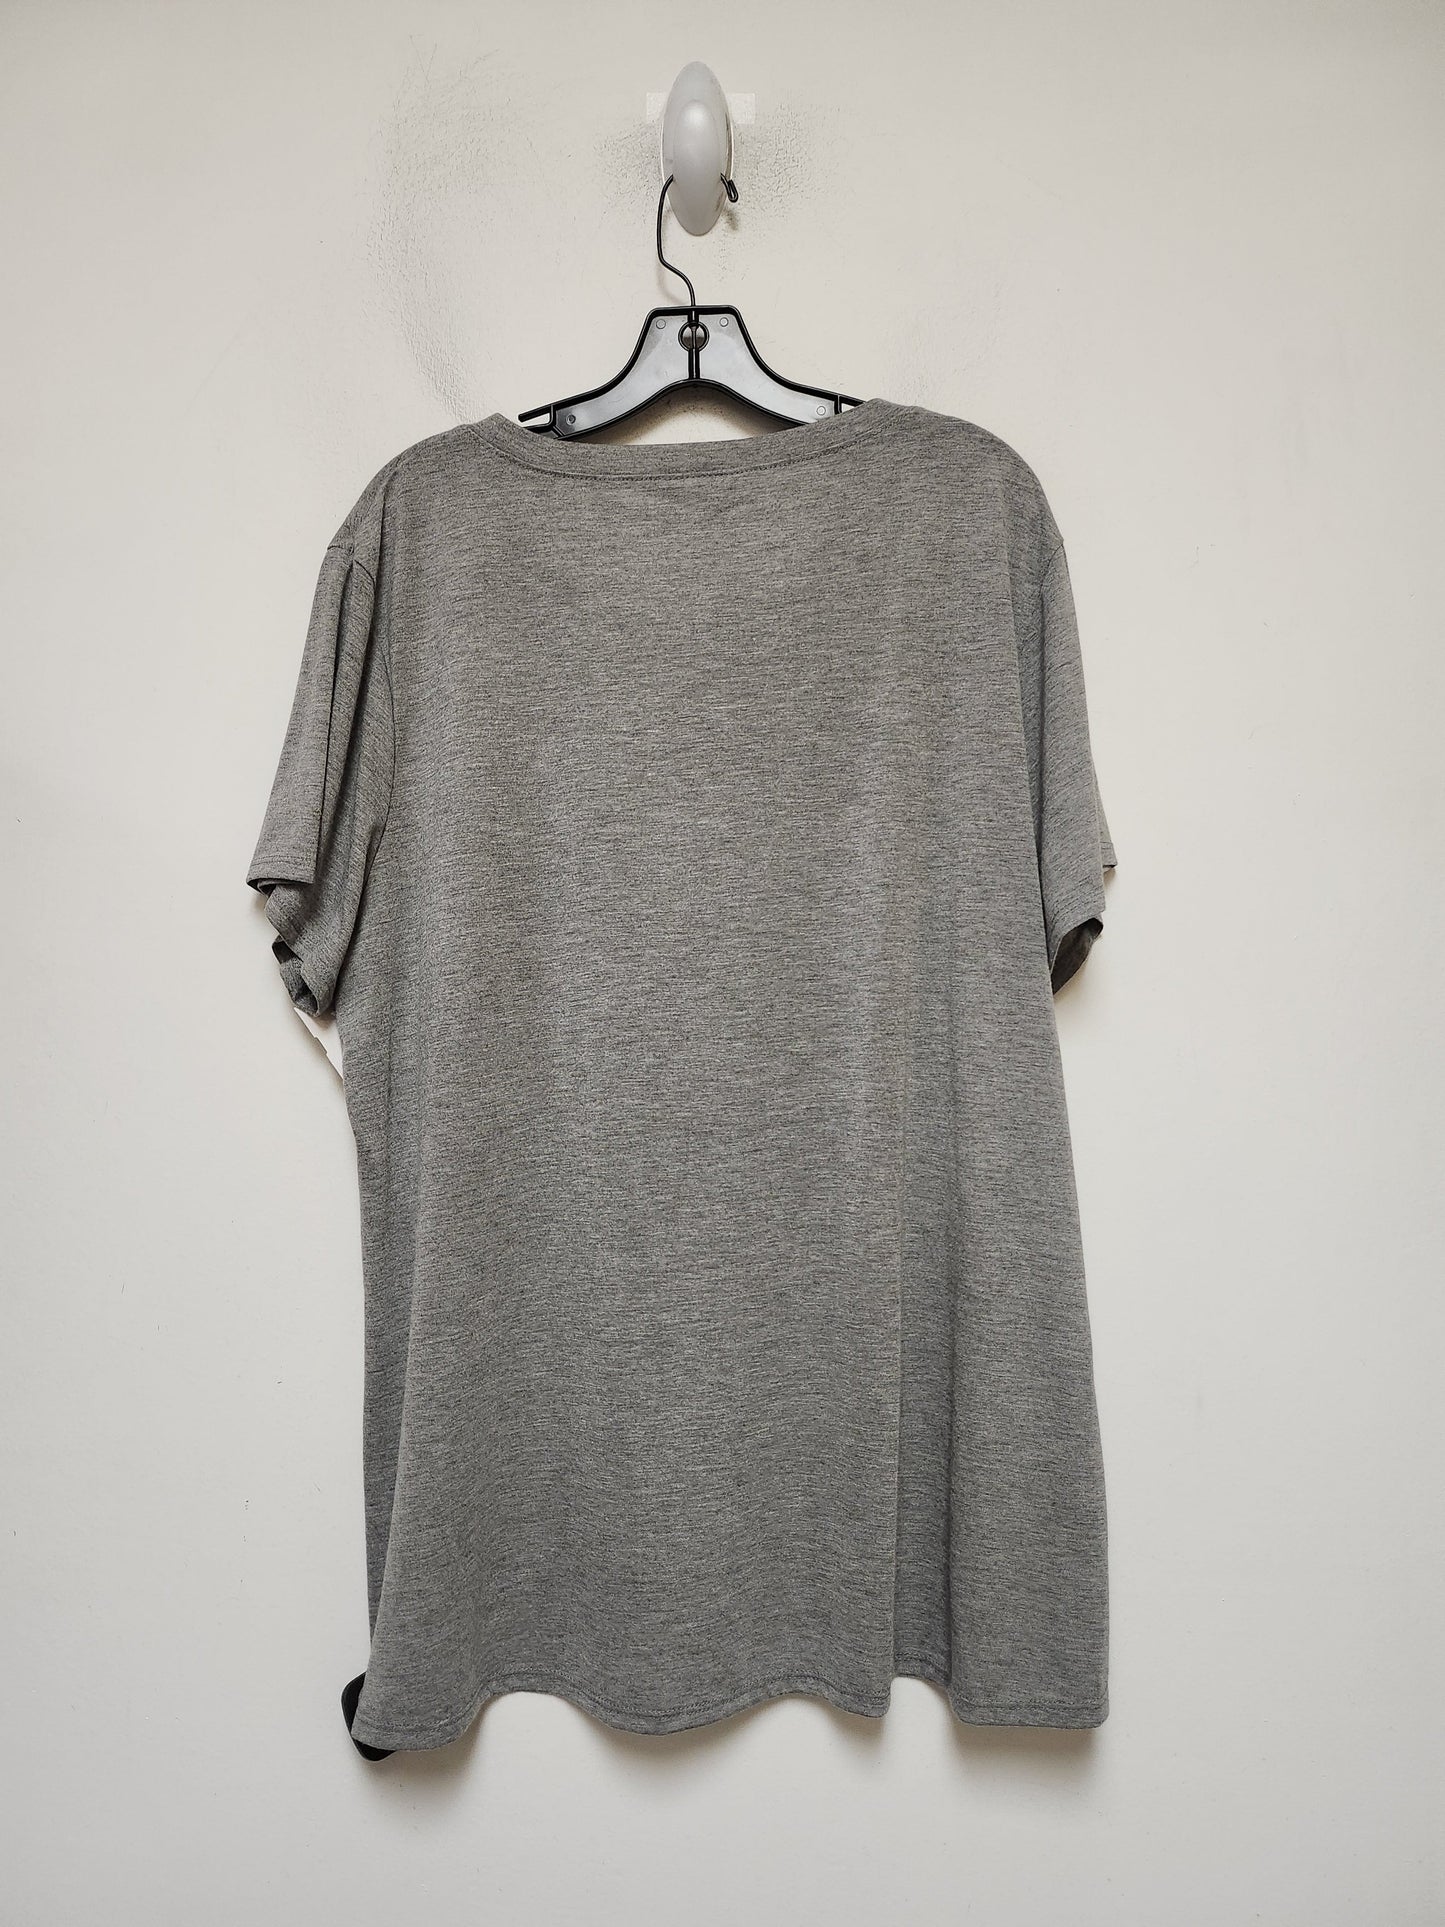 Grey Top Short Sleeve Basic Clothes Mentor, Size 2x